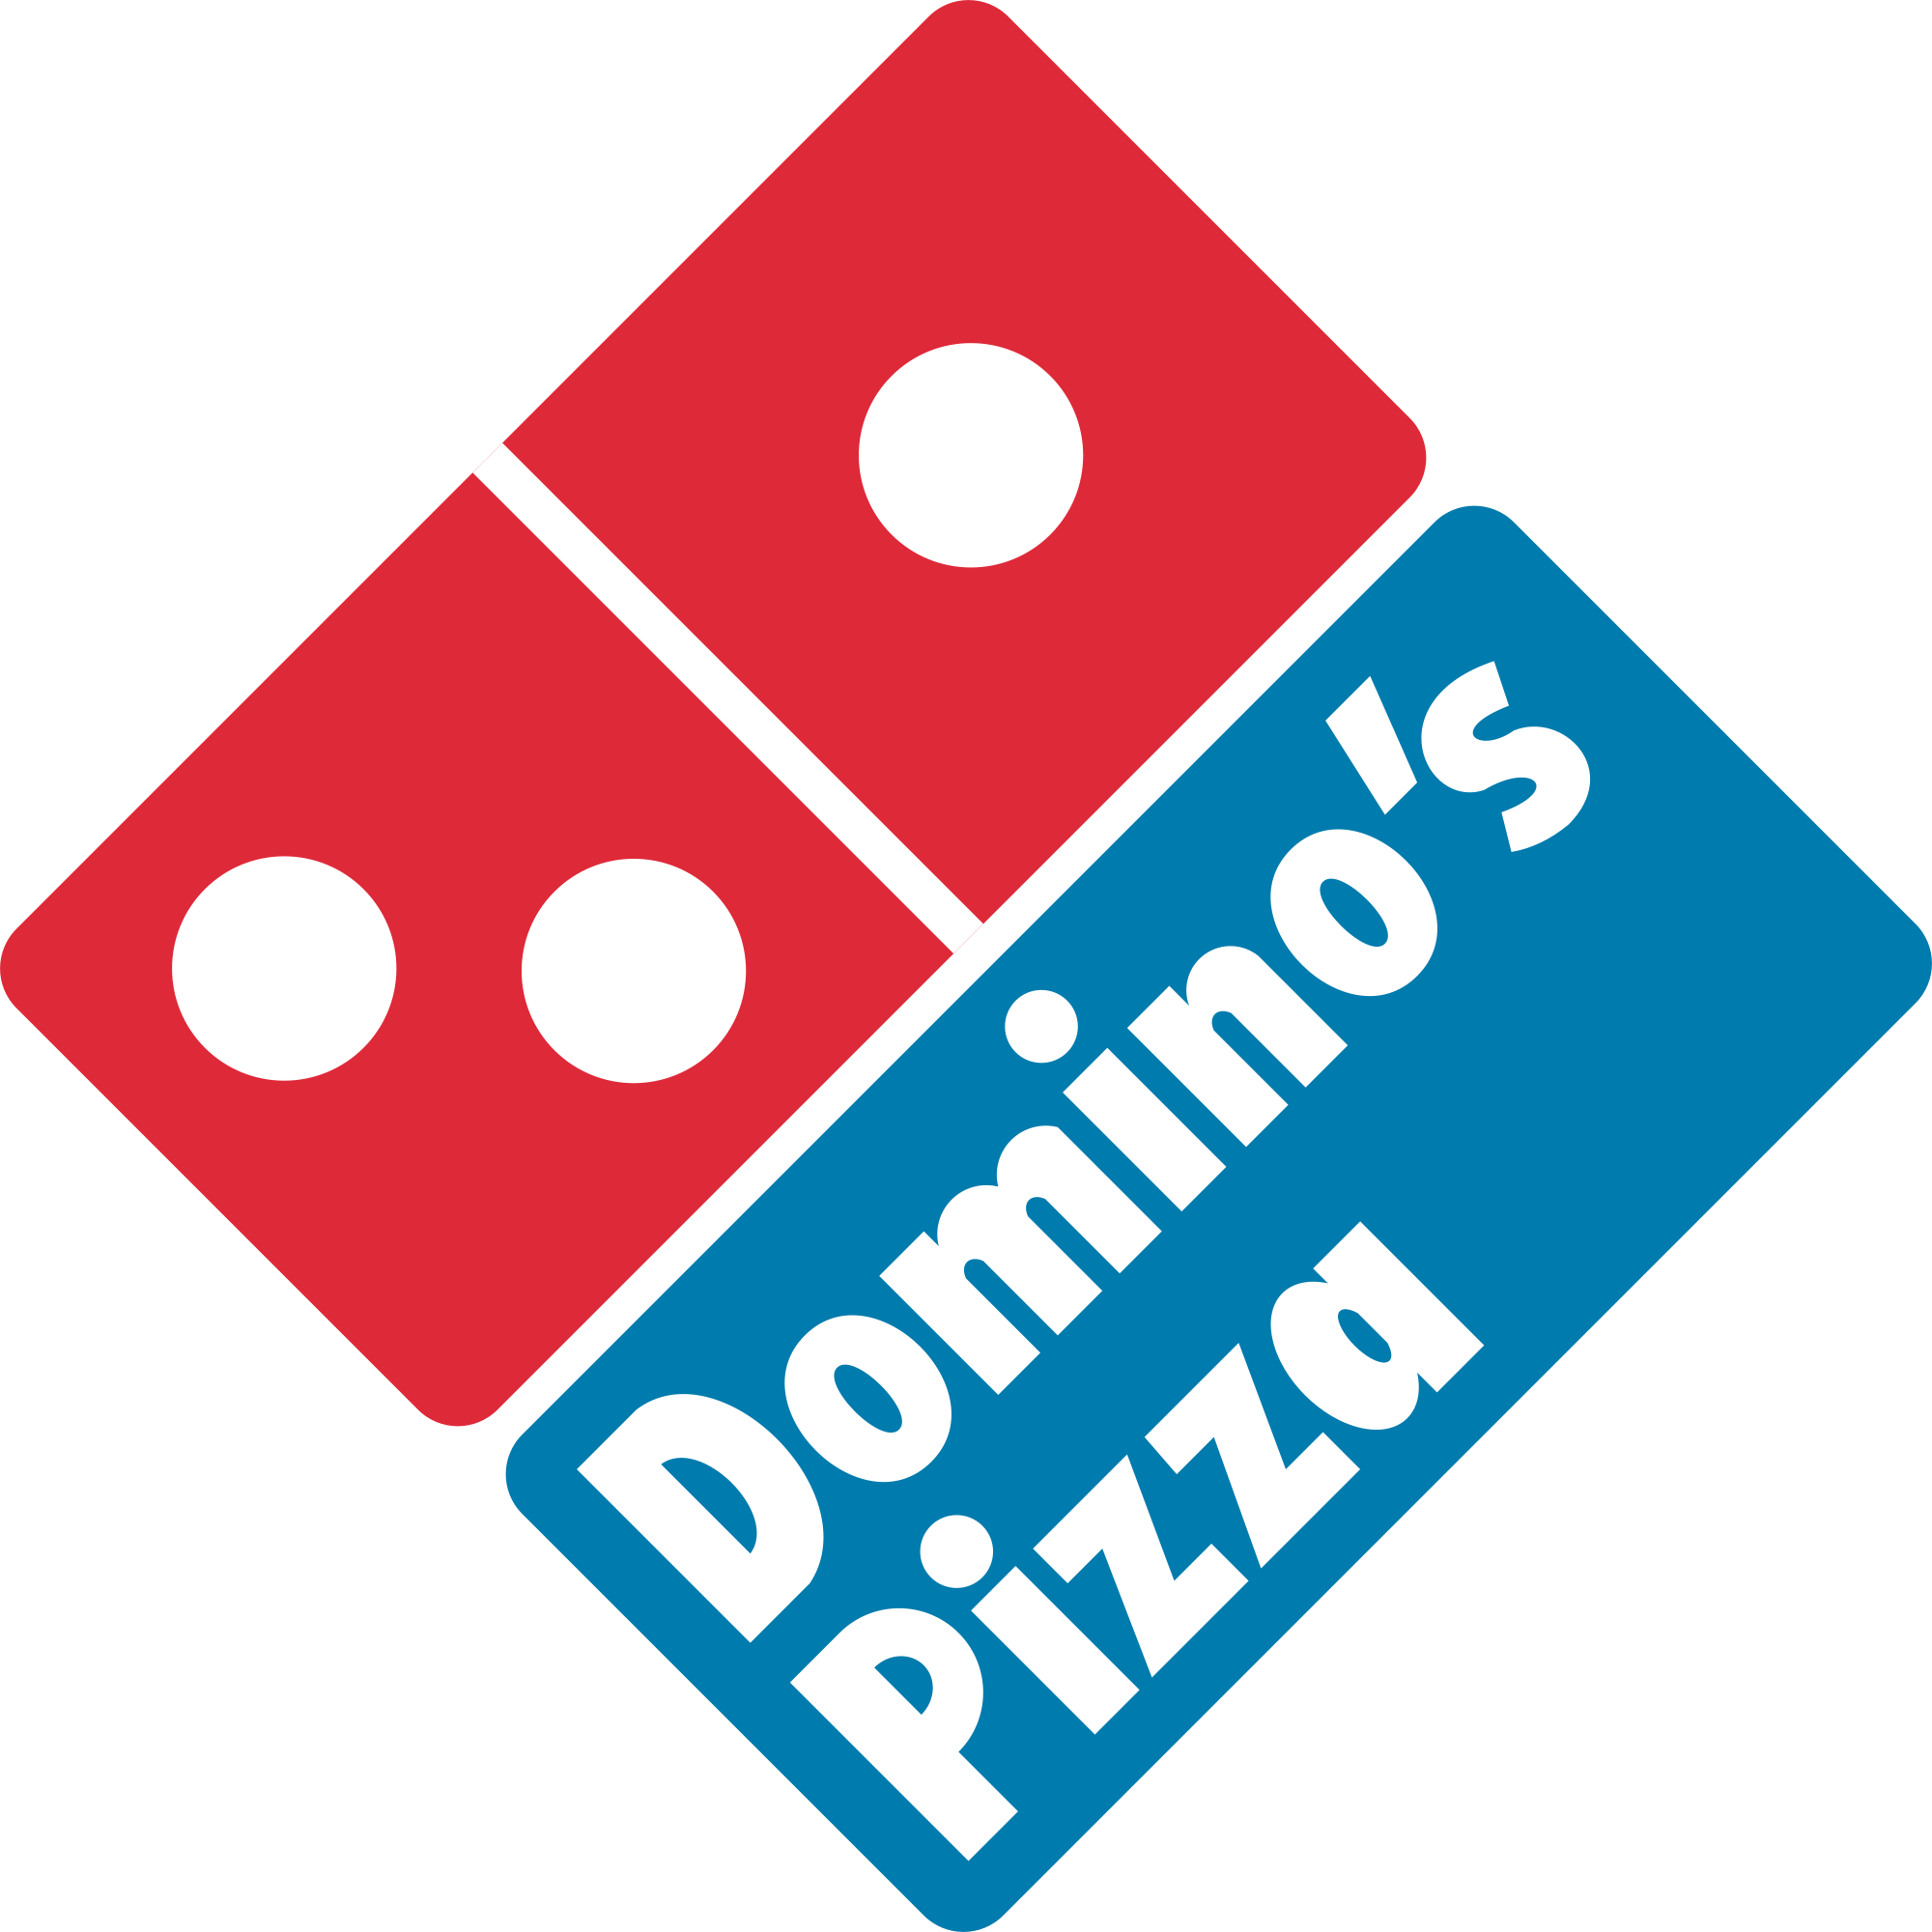 Domino's Pizza Enterprises - Wikipedia, the free encyclopedia